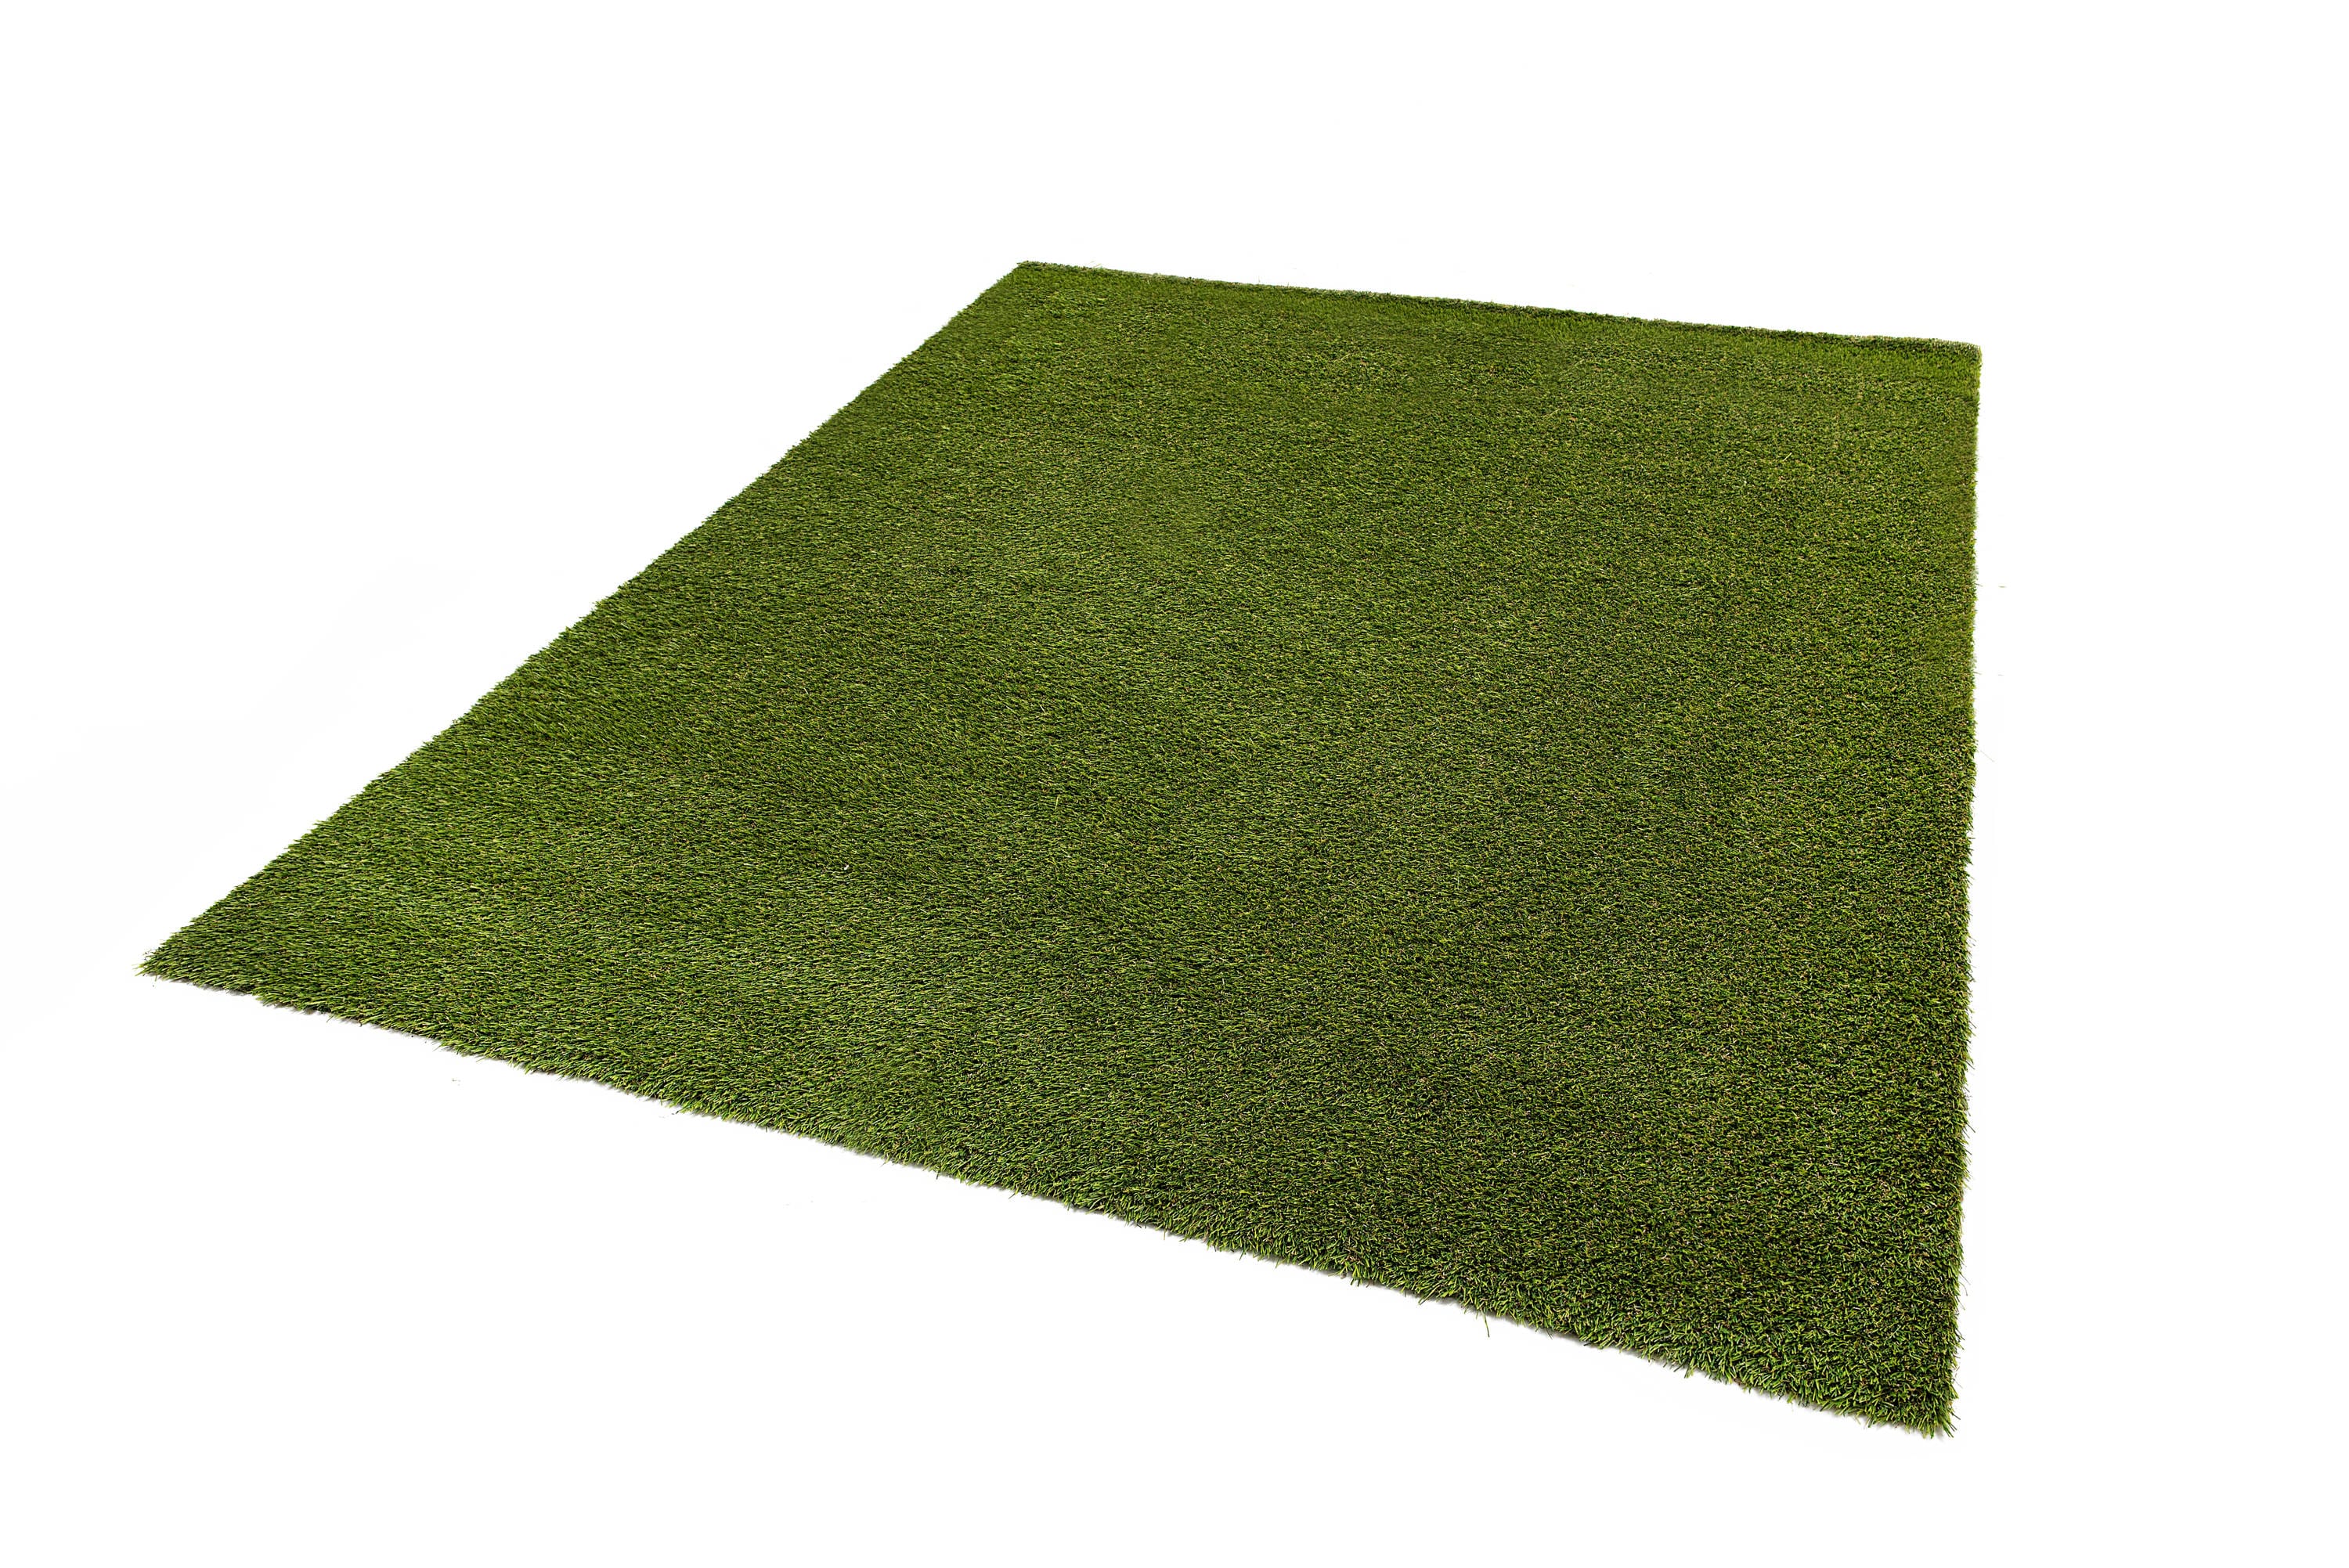 24 x 16 Portable Indoor Dog Potty Grass